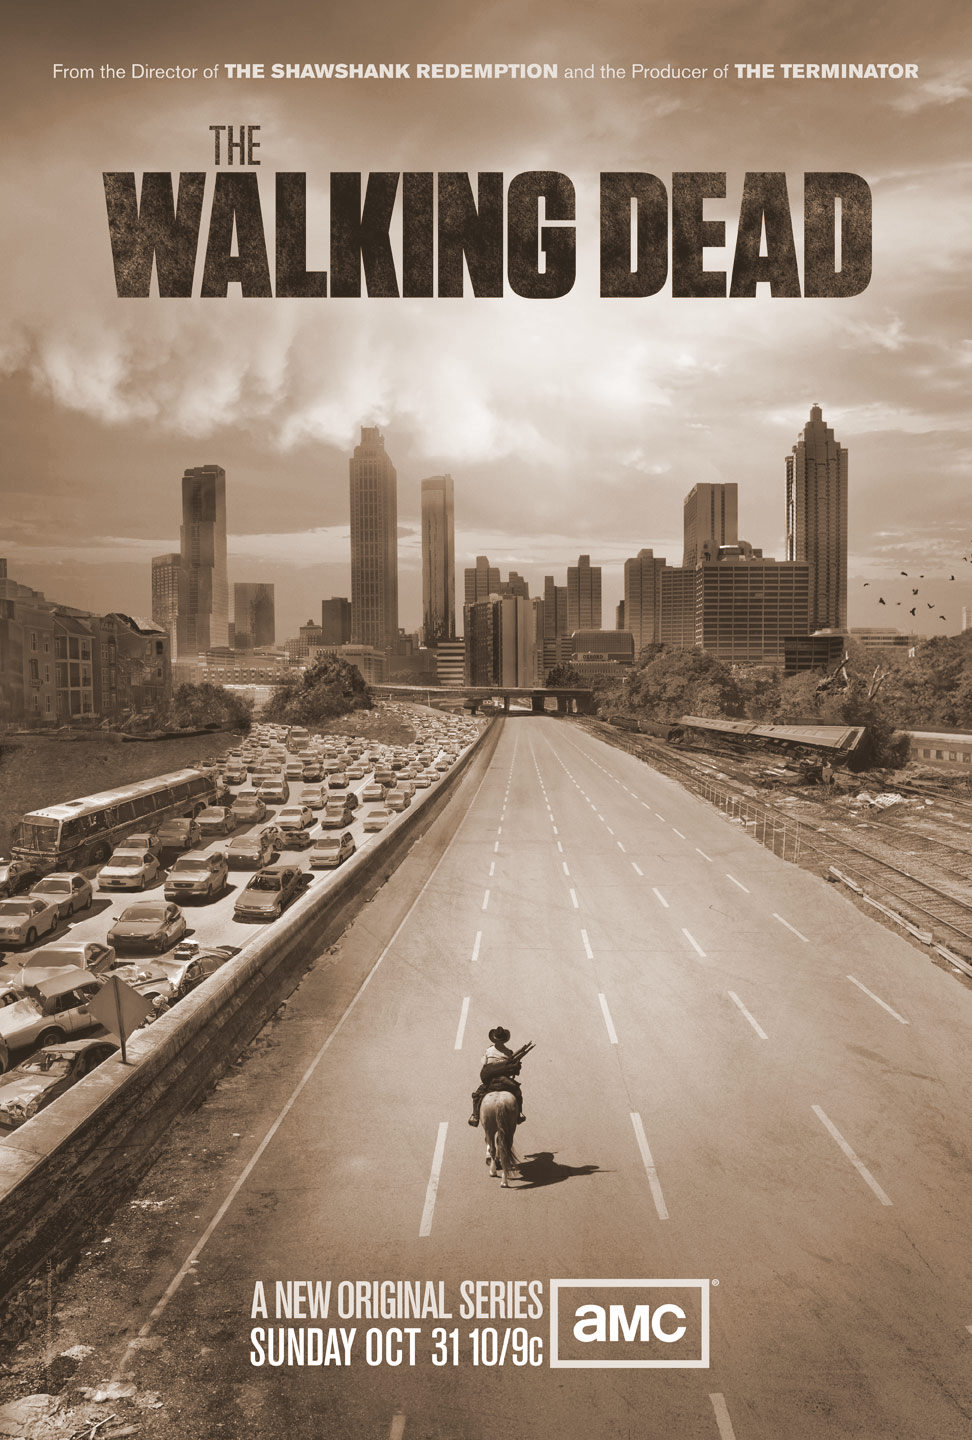 Stiahni si Seriál Zivi mrtvi / The Walking Dead S07E02 - The Well [WebRip][1080p] = CSFD 80%